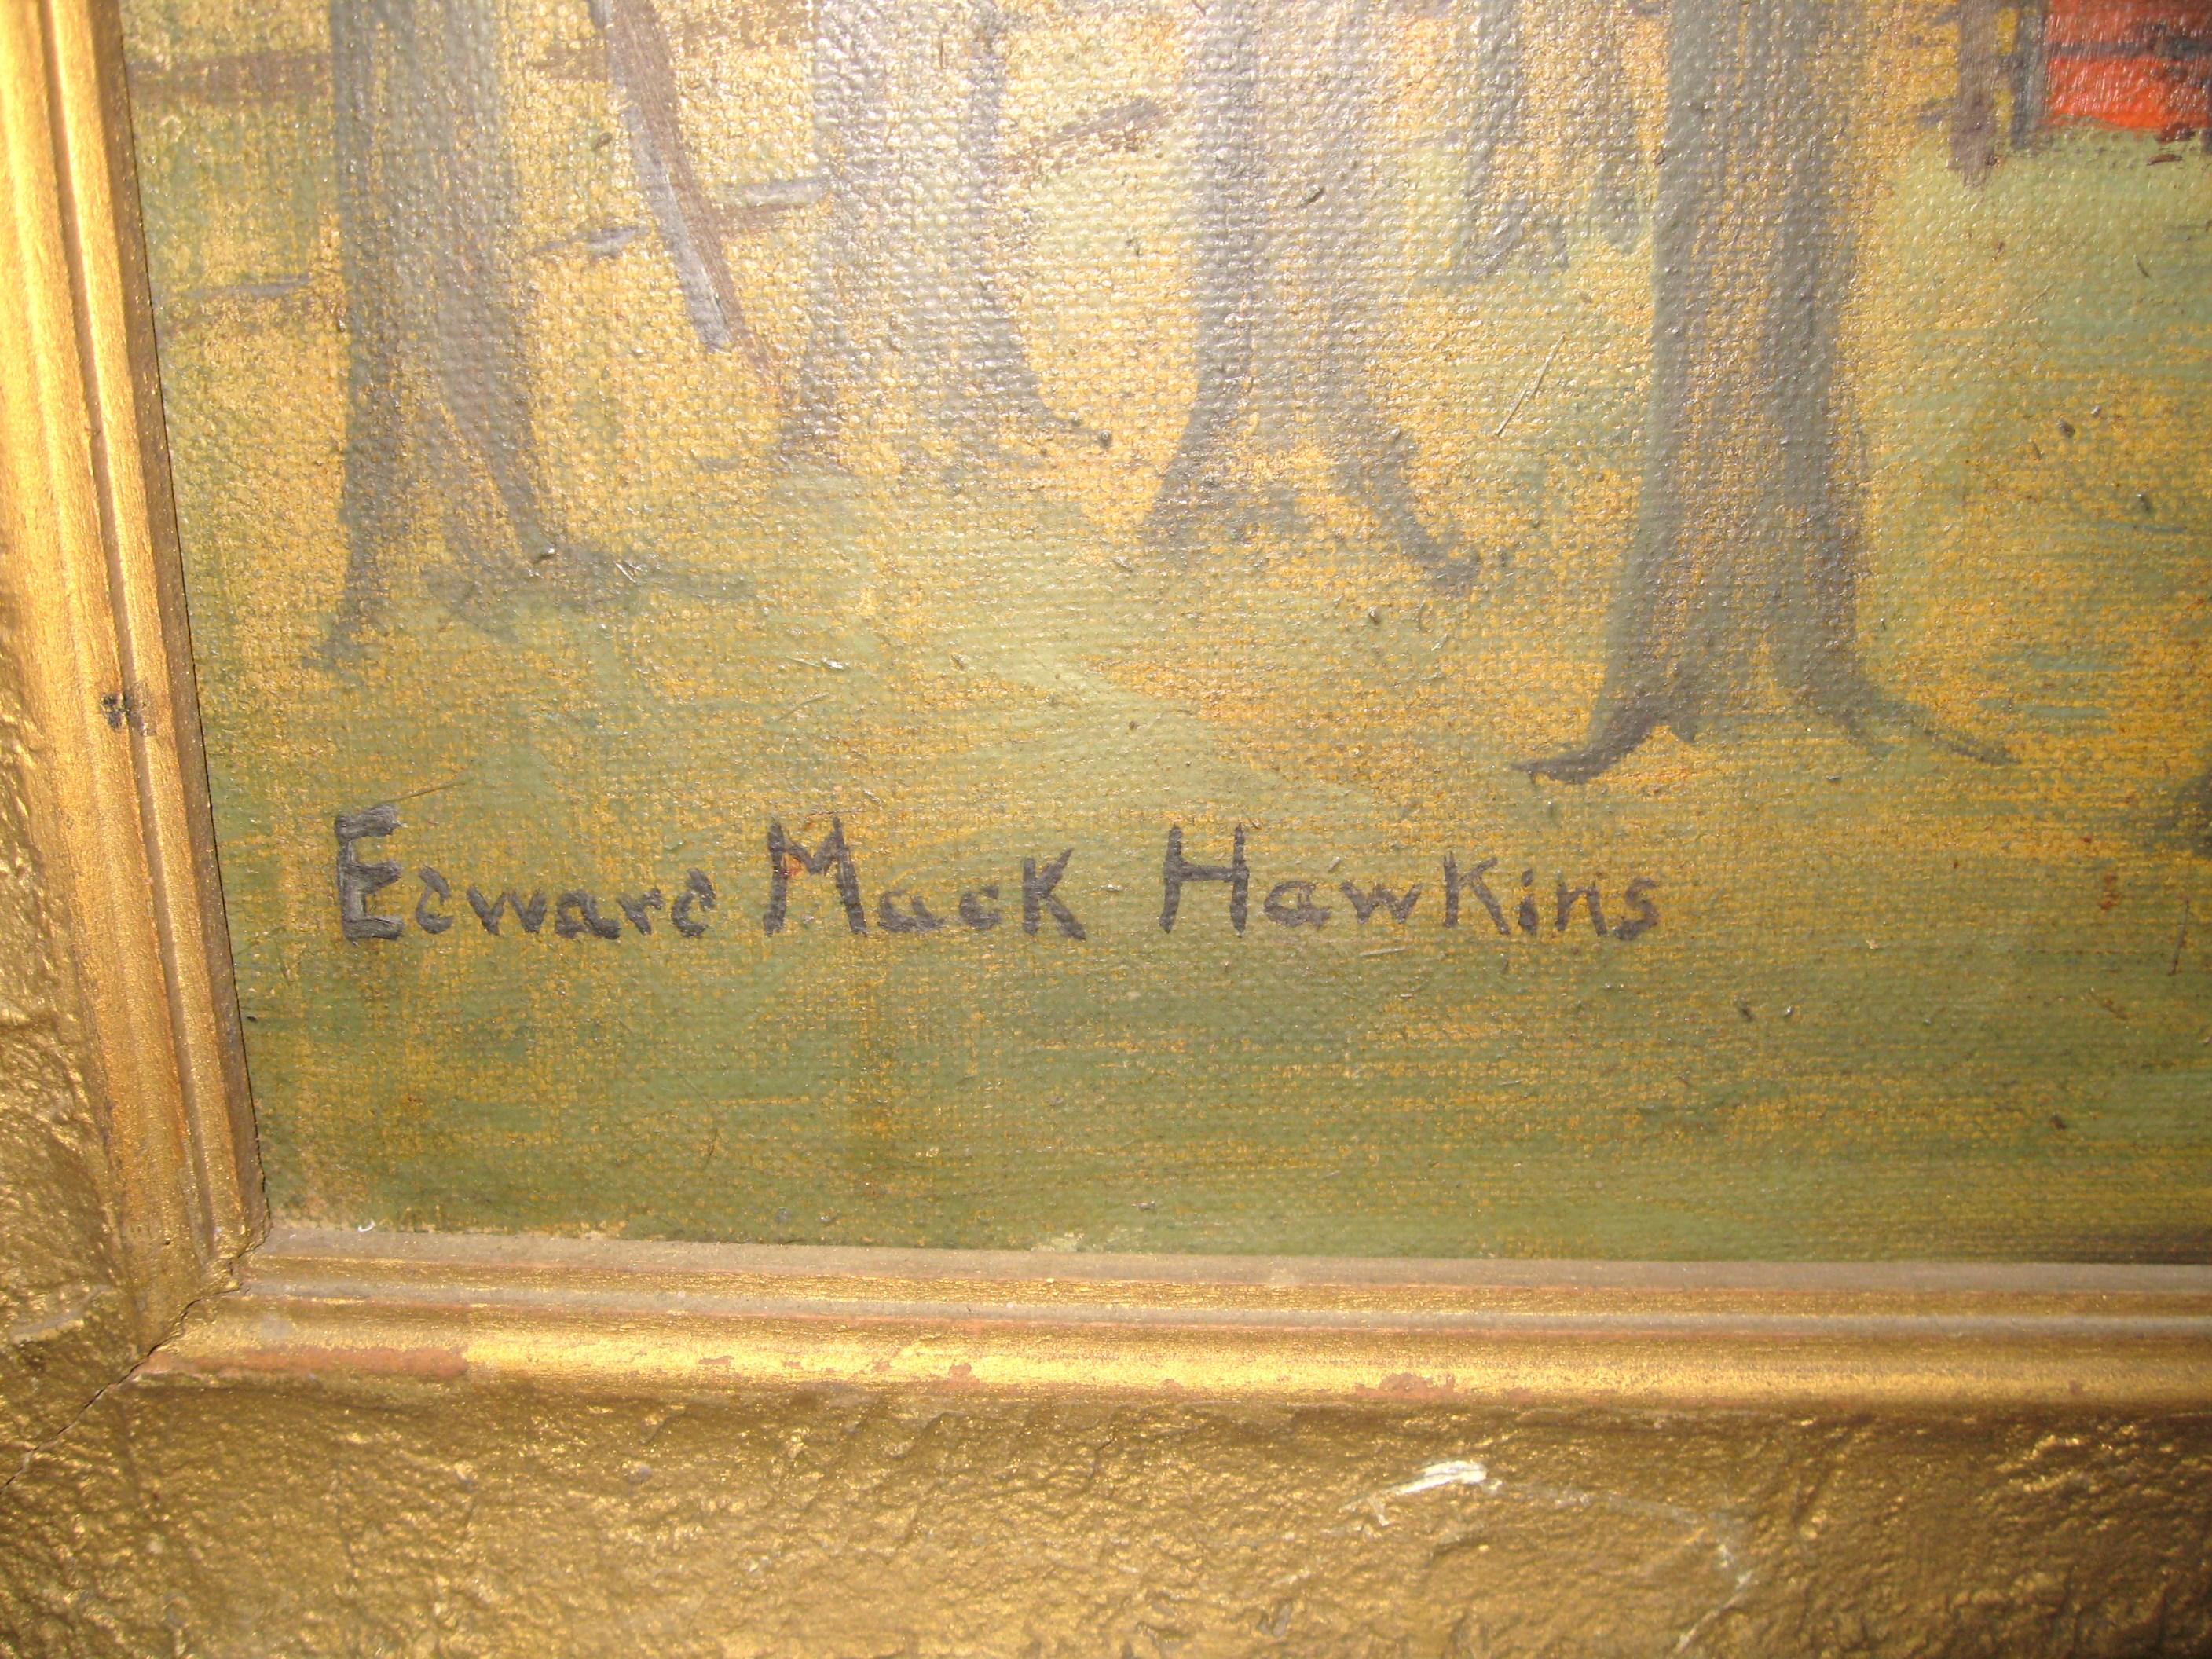 Adirondack Edward Mack Hawkins, 